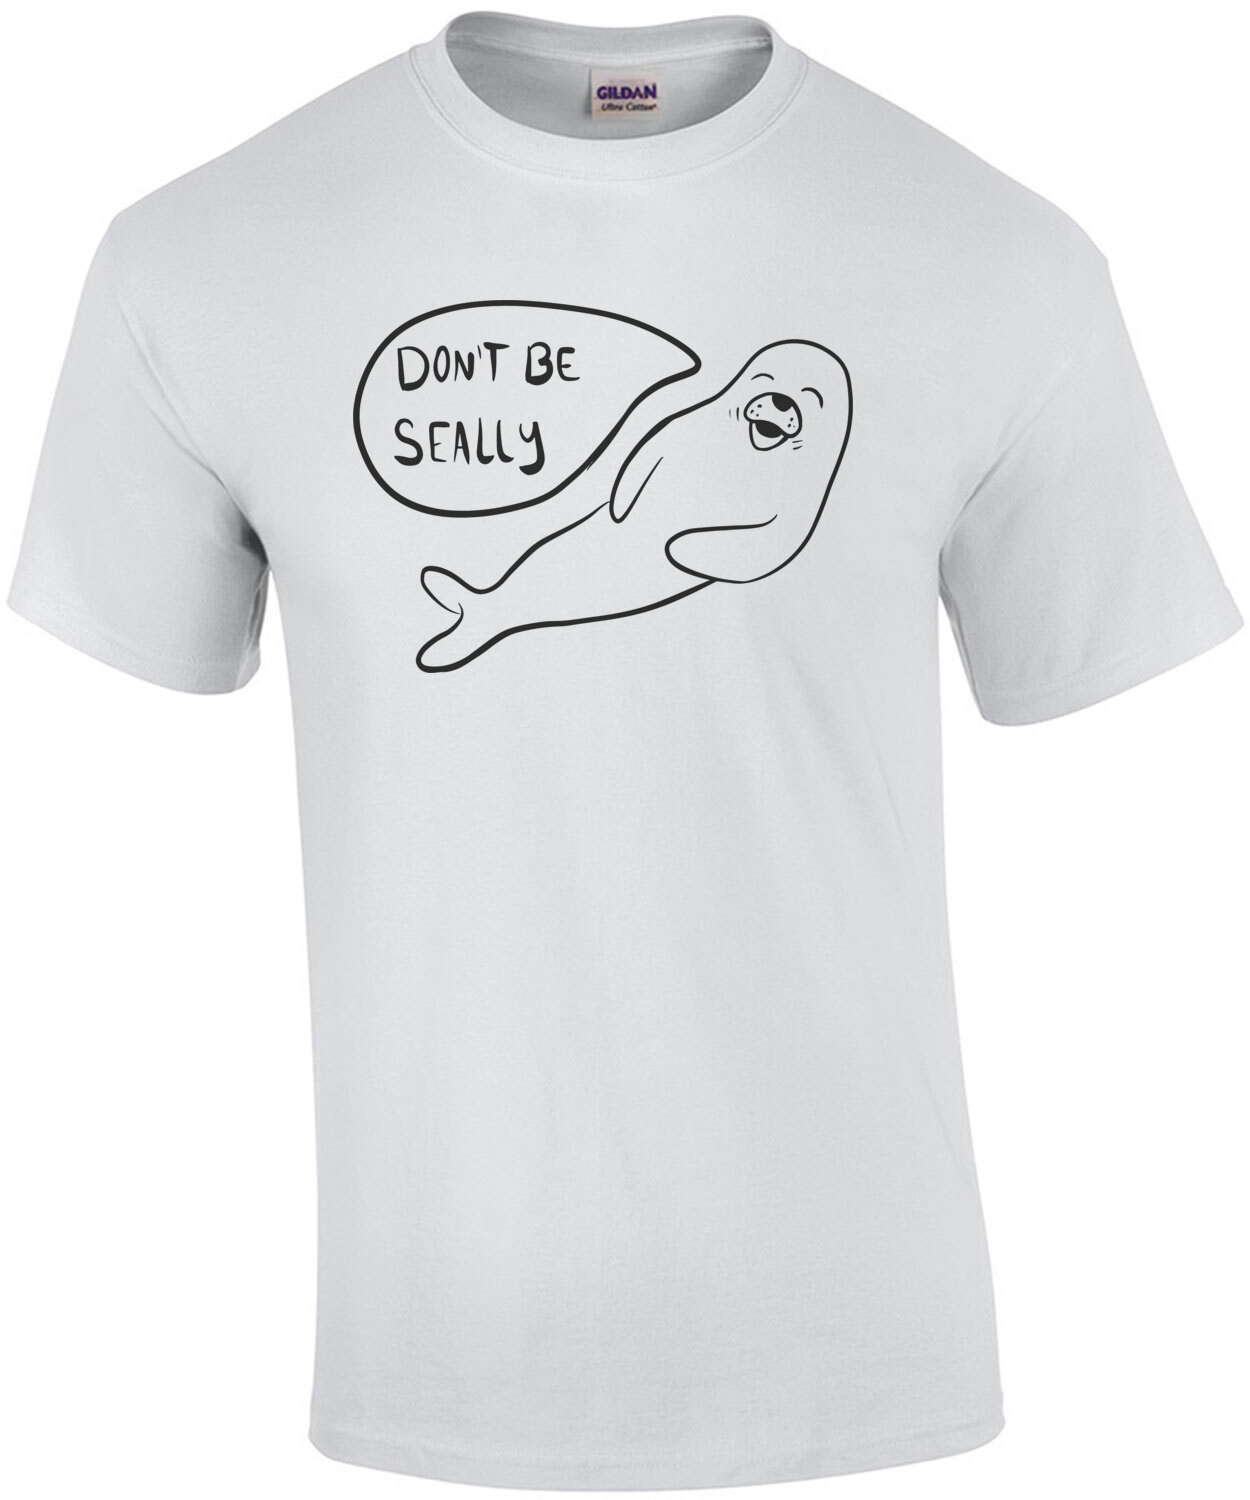 Don't be seally - cute pun t-shirt